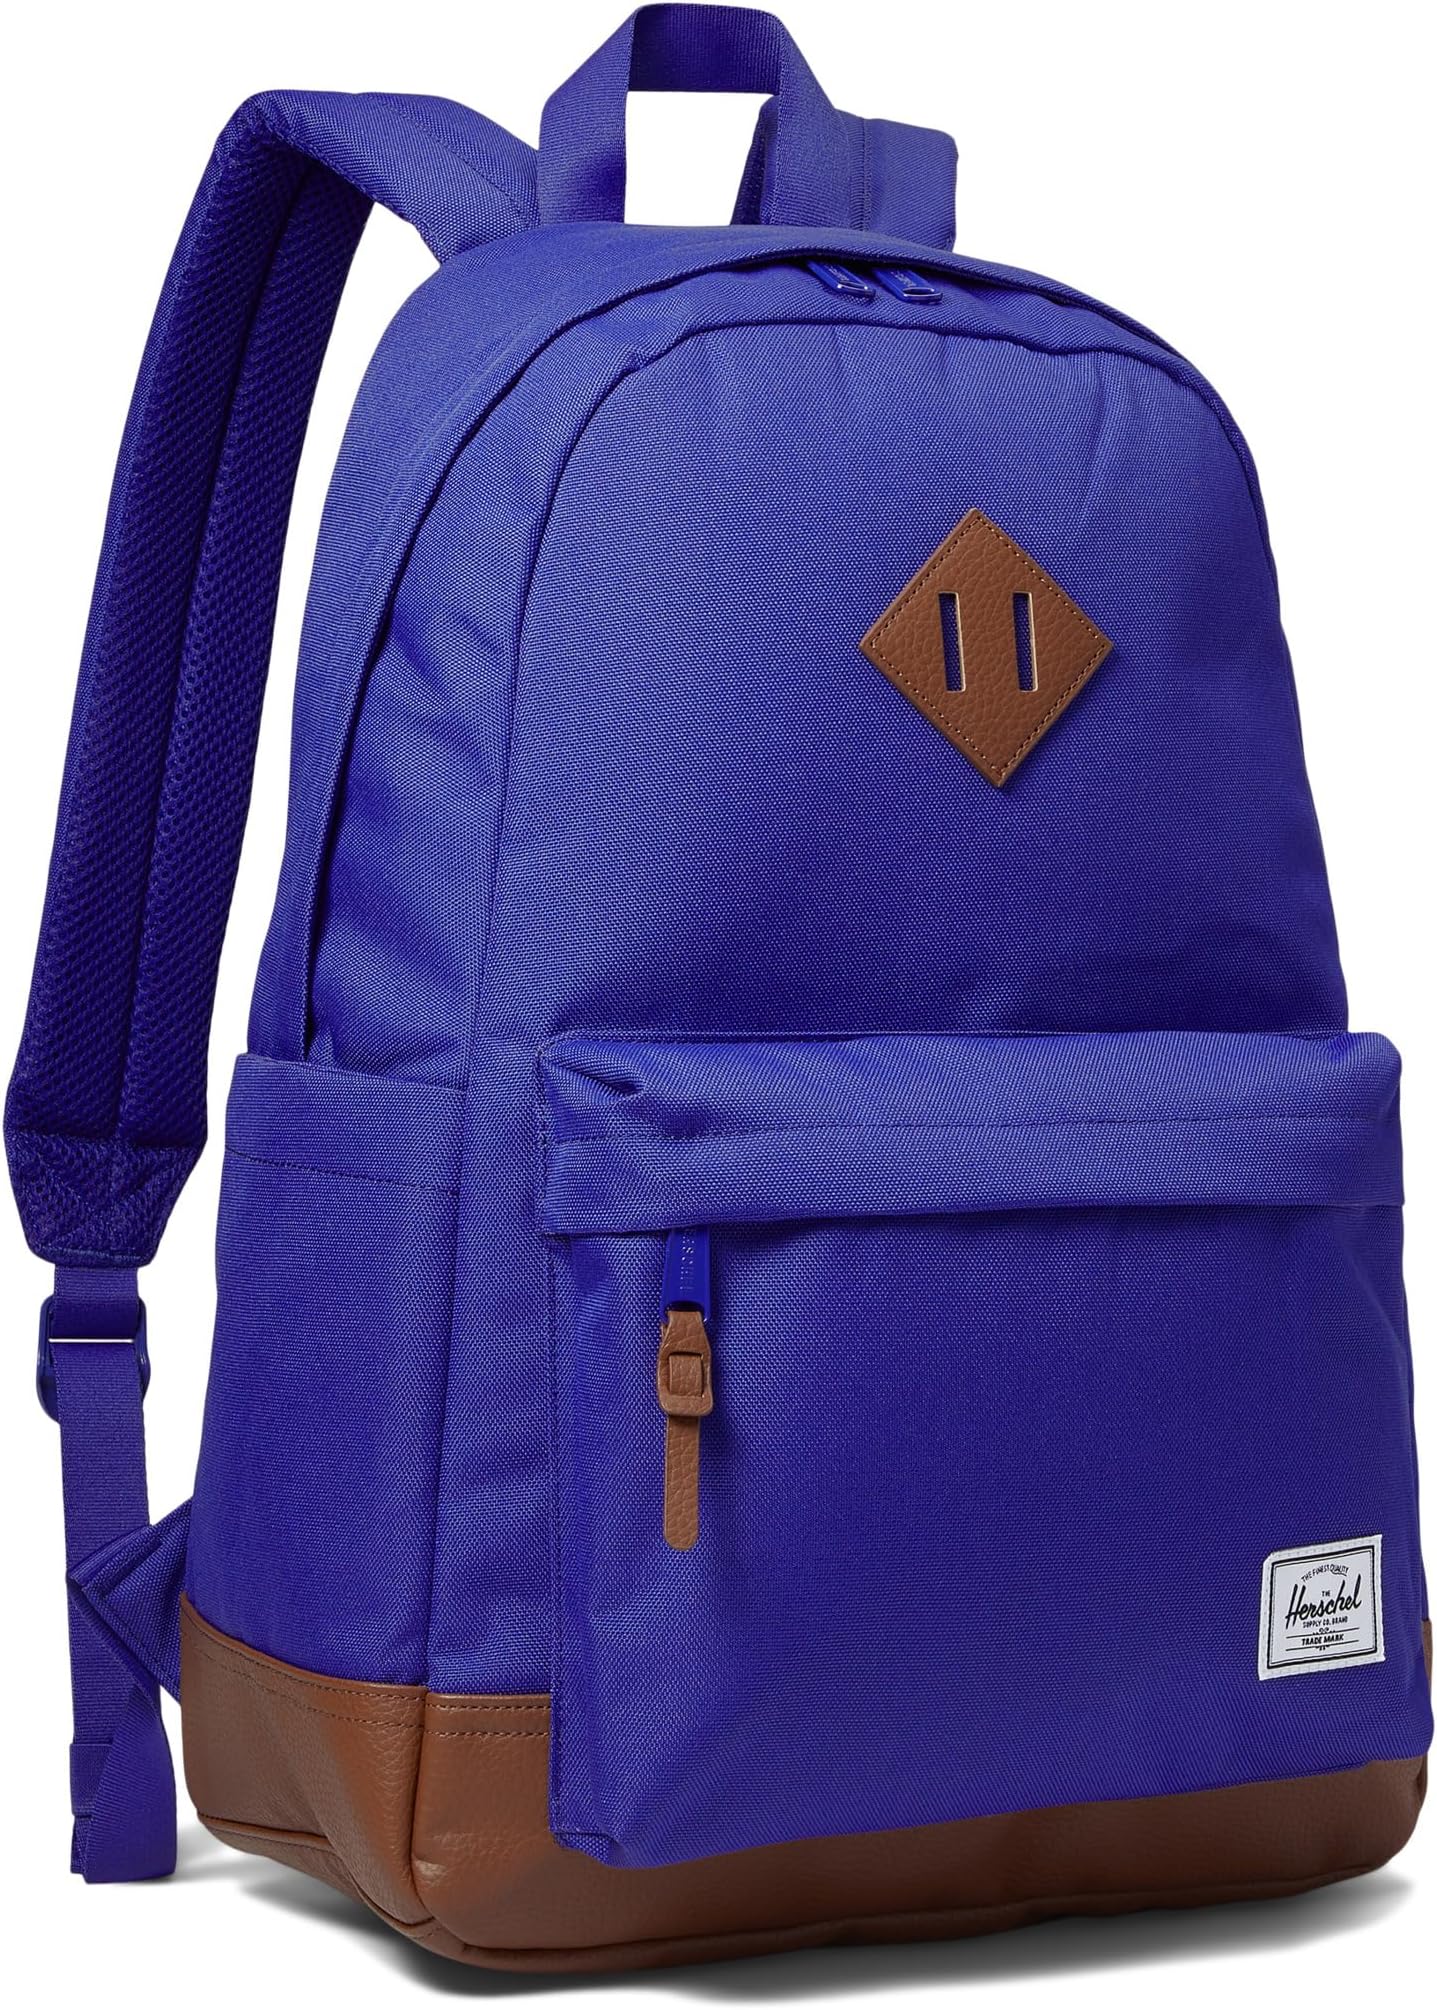 рюкзак heritage herschel цвет navy blue Рюкзак Heritage Backpack Herschel Supply Co., цвет Royal Blue/Tan